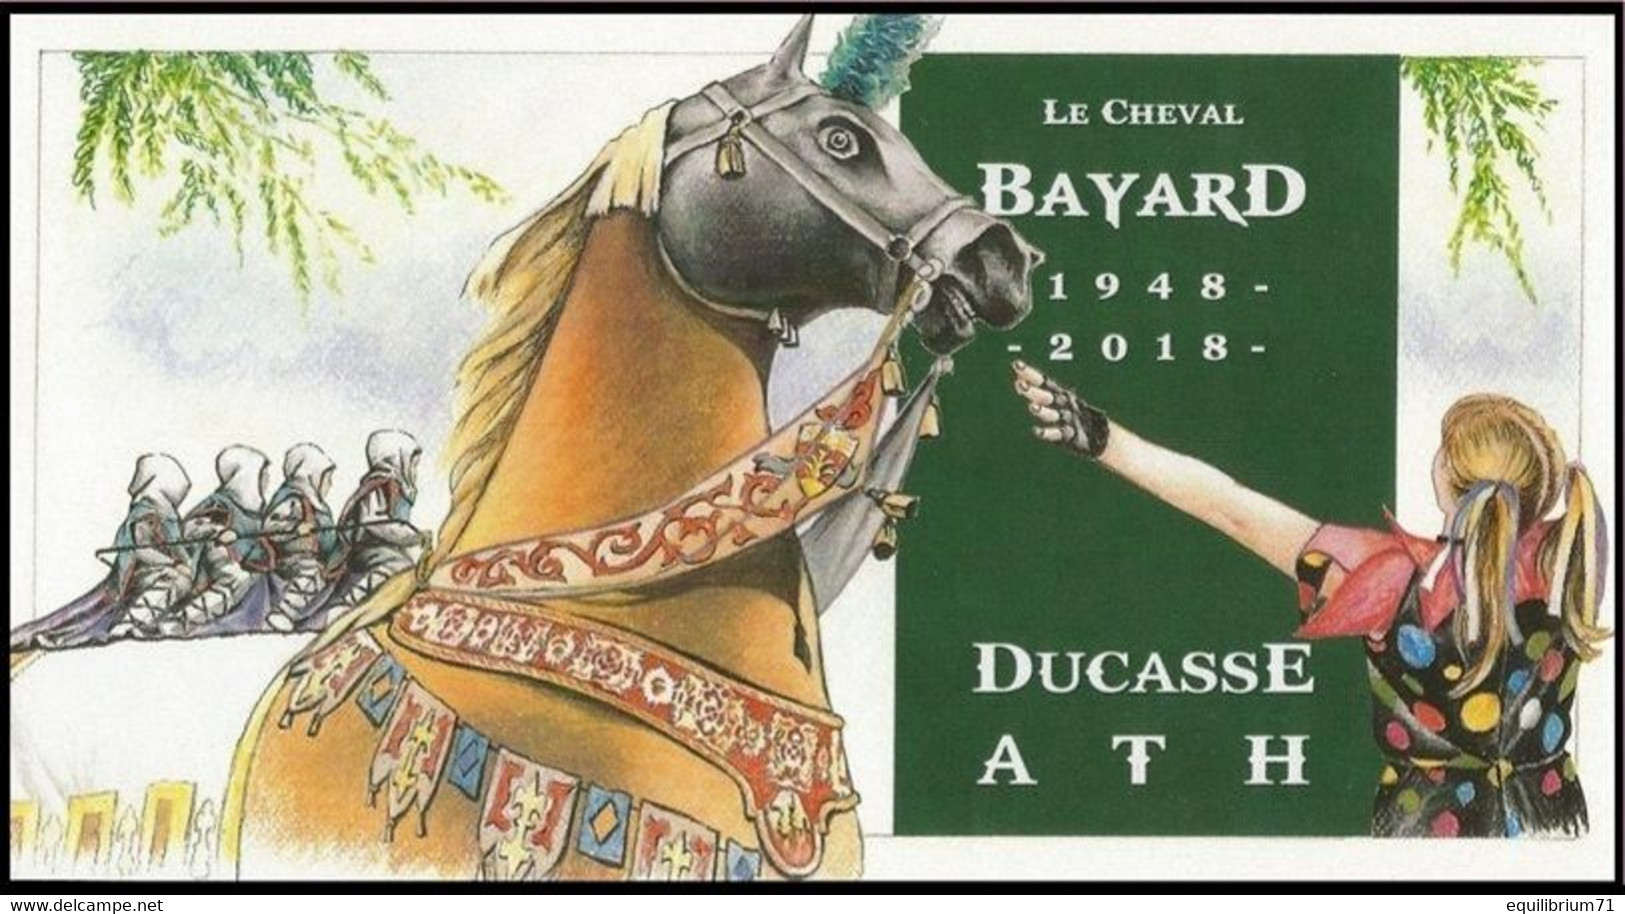 CS/HK° - Carte Souvenir/Herdenkingskaart - Ath -  1948/2018 - Le Cheval Bayard - SIGNÉ/GETEKEND: Christine Carles - Covers & Documents